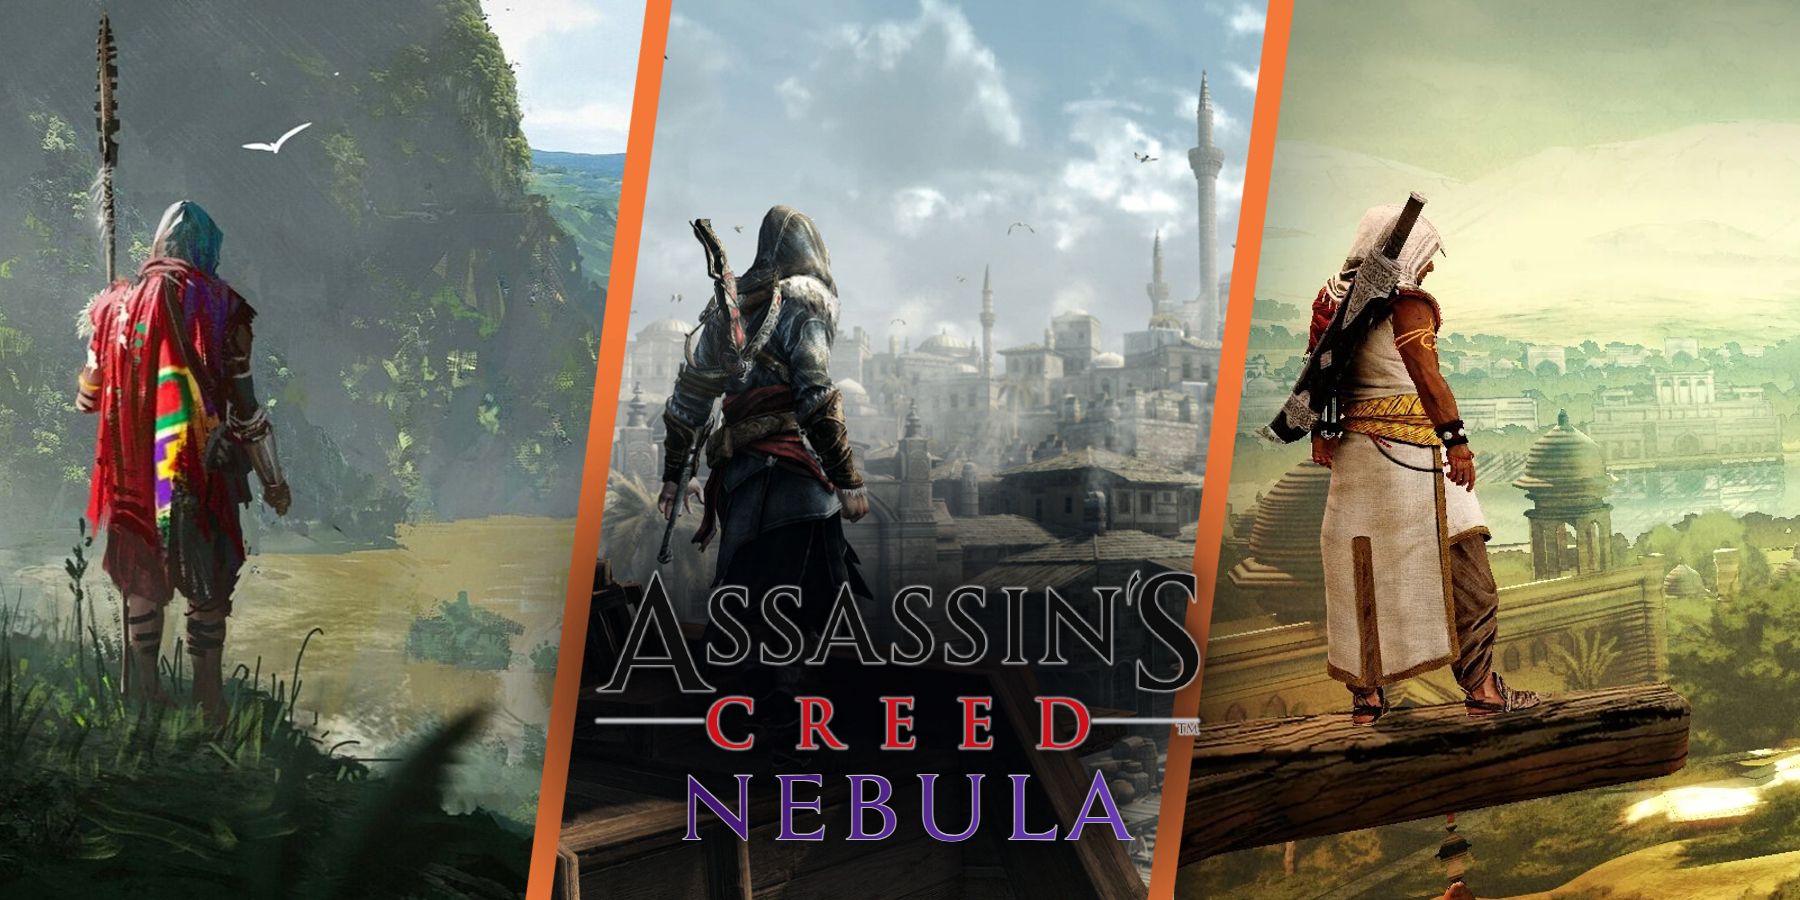 Assassin's Creed Nebula Settings